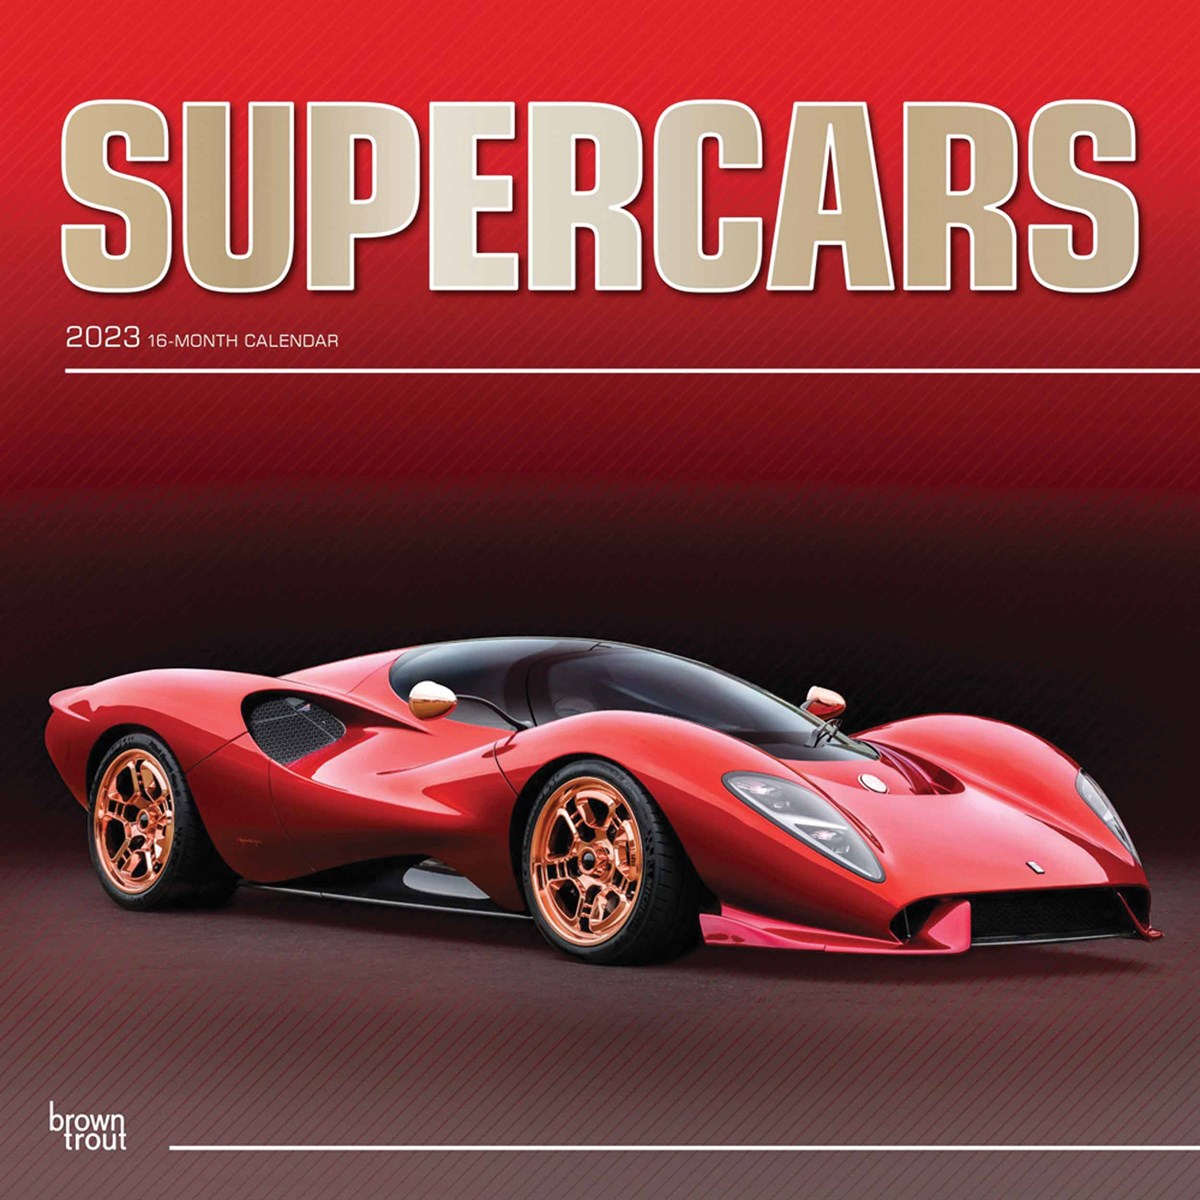 Supercars 2023 Calendars